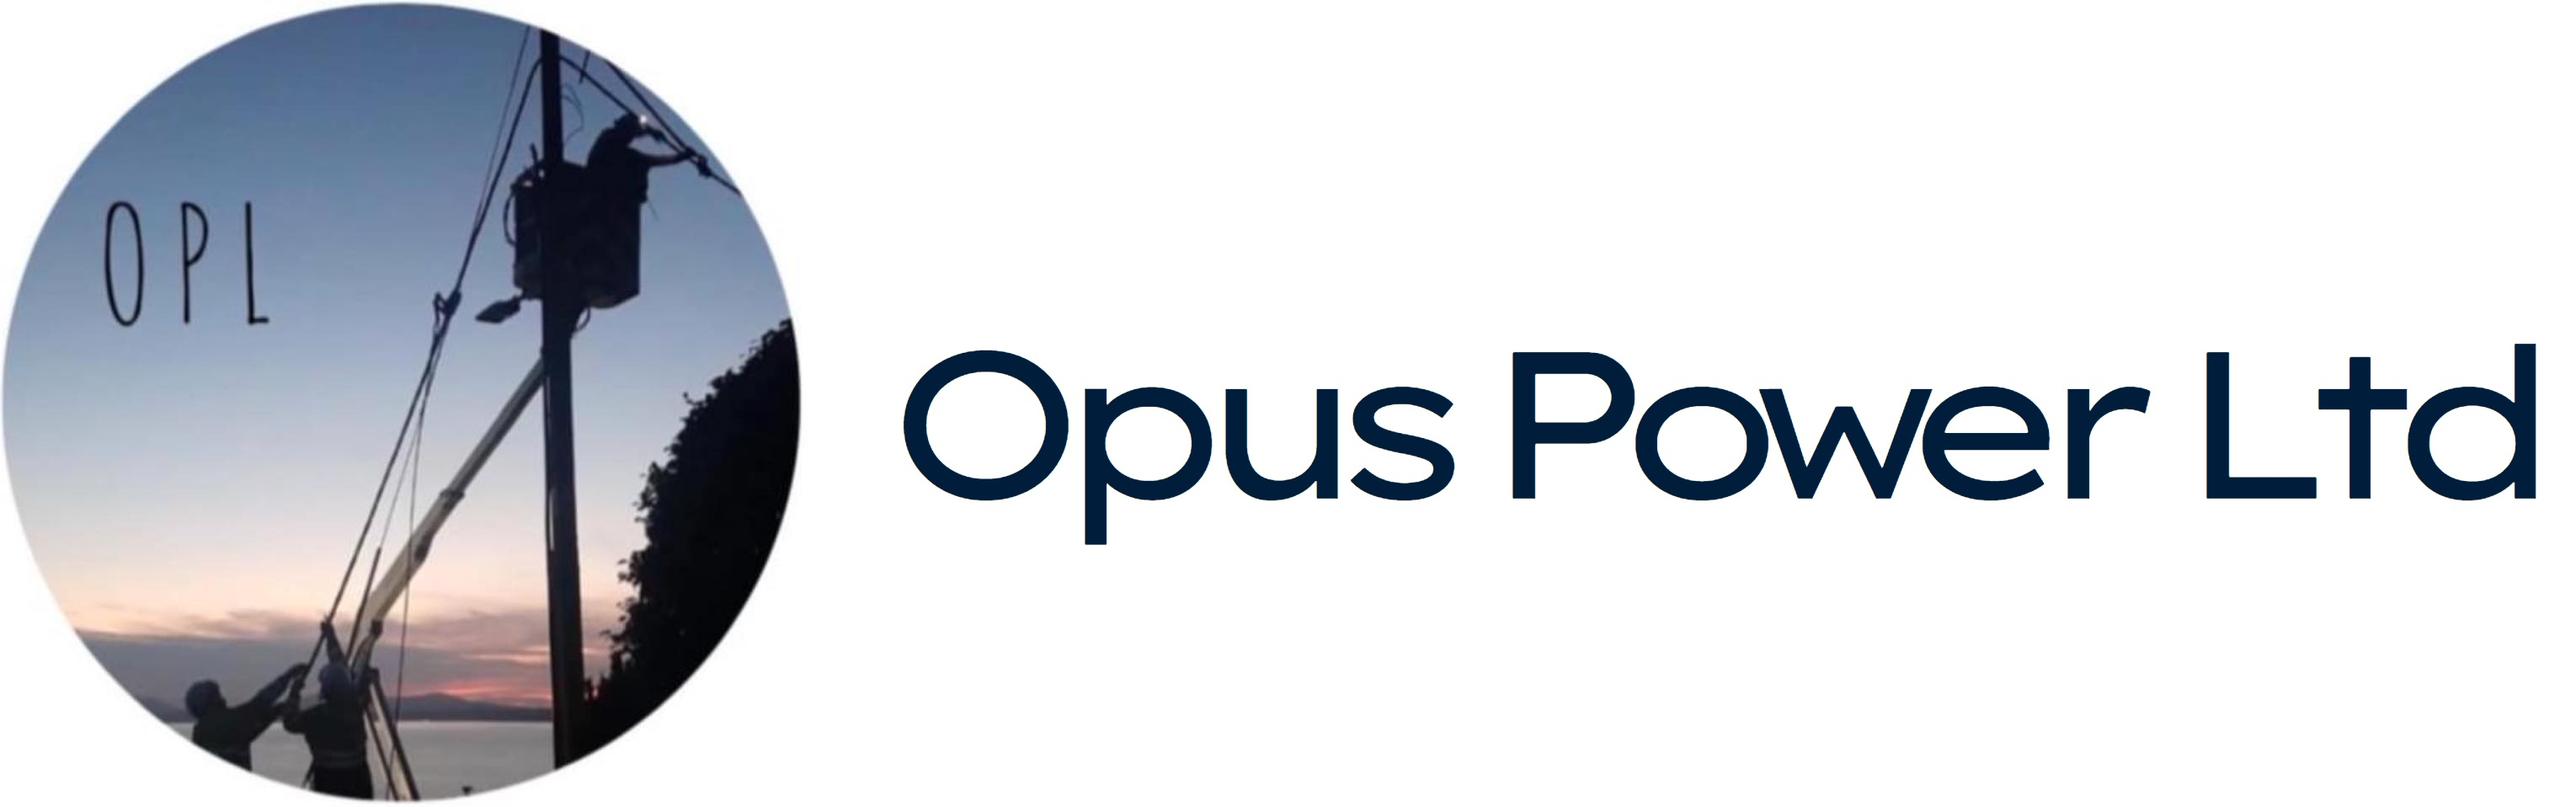 Opus Power Ltd